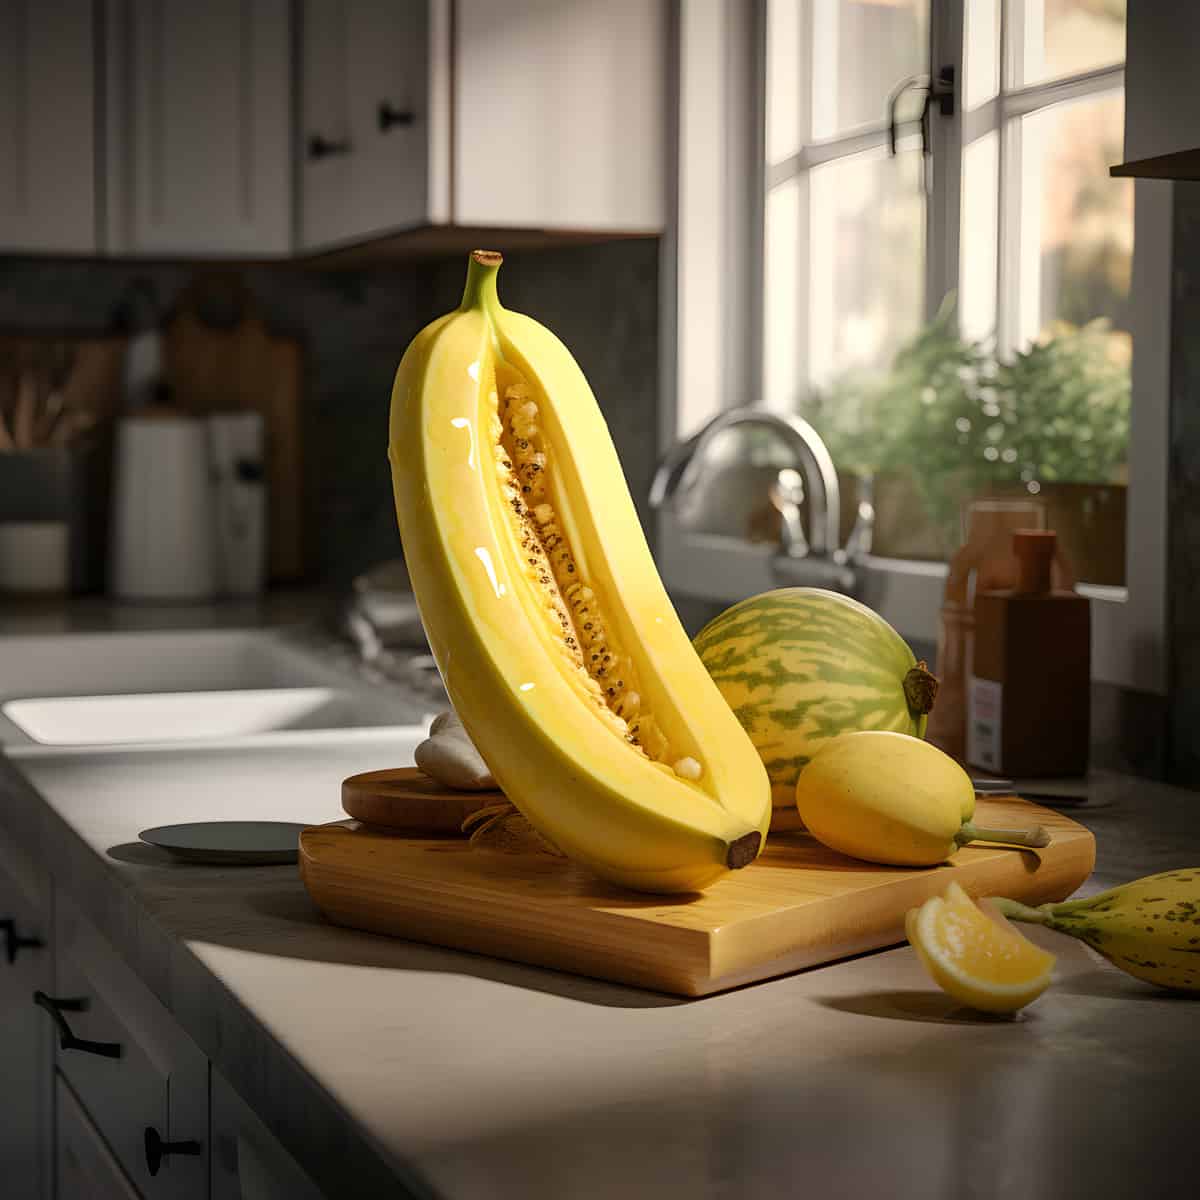 Banana Melon on a kitchen counter